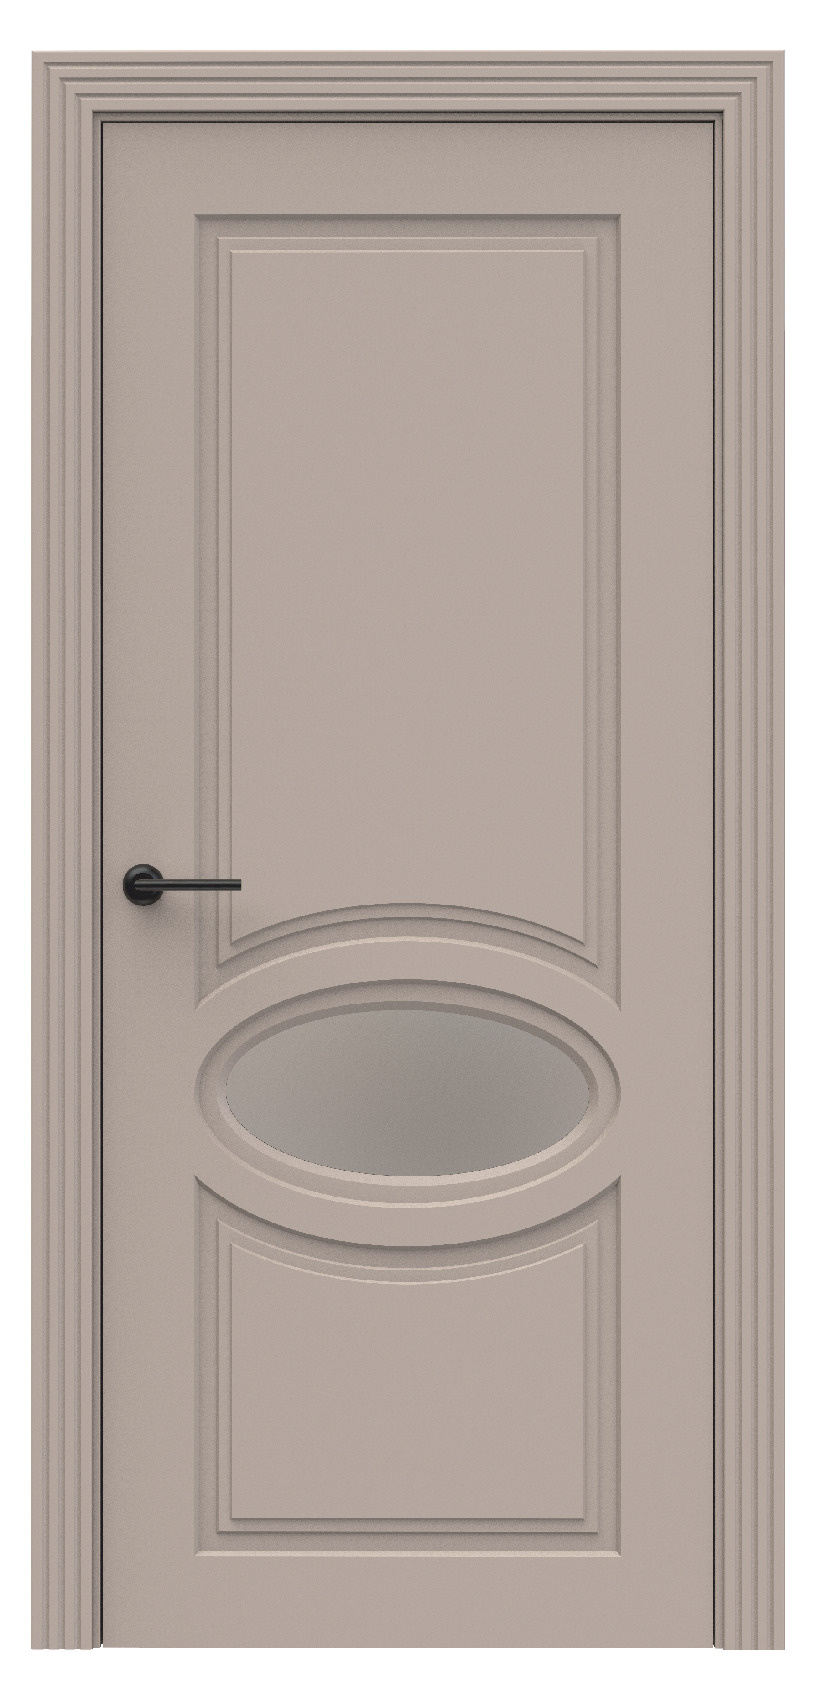 Questdoors Межкомнатная дверь QI24, арт. 17985 - фото №1